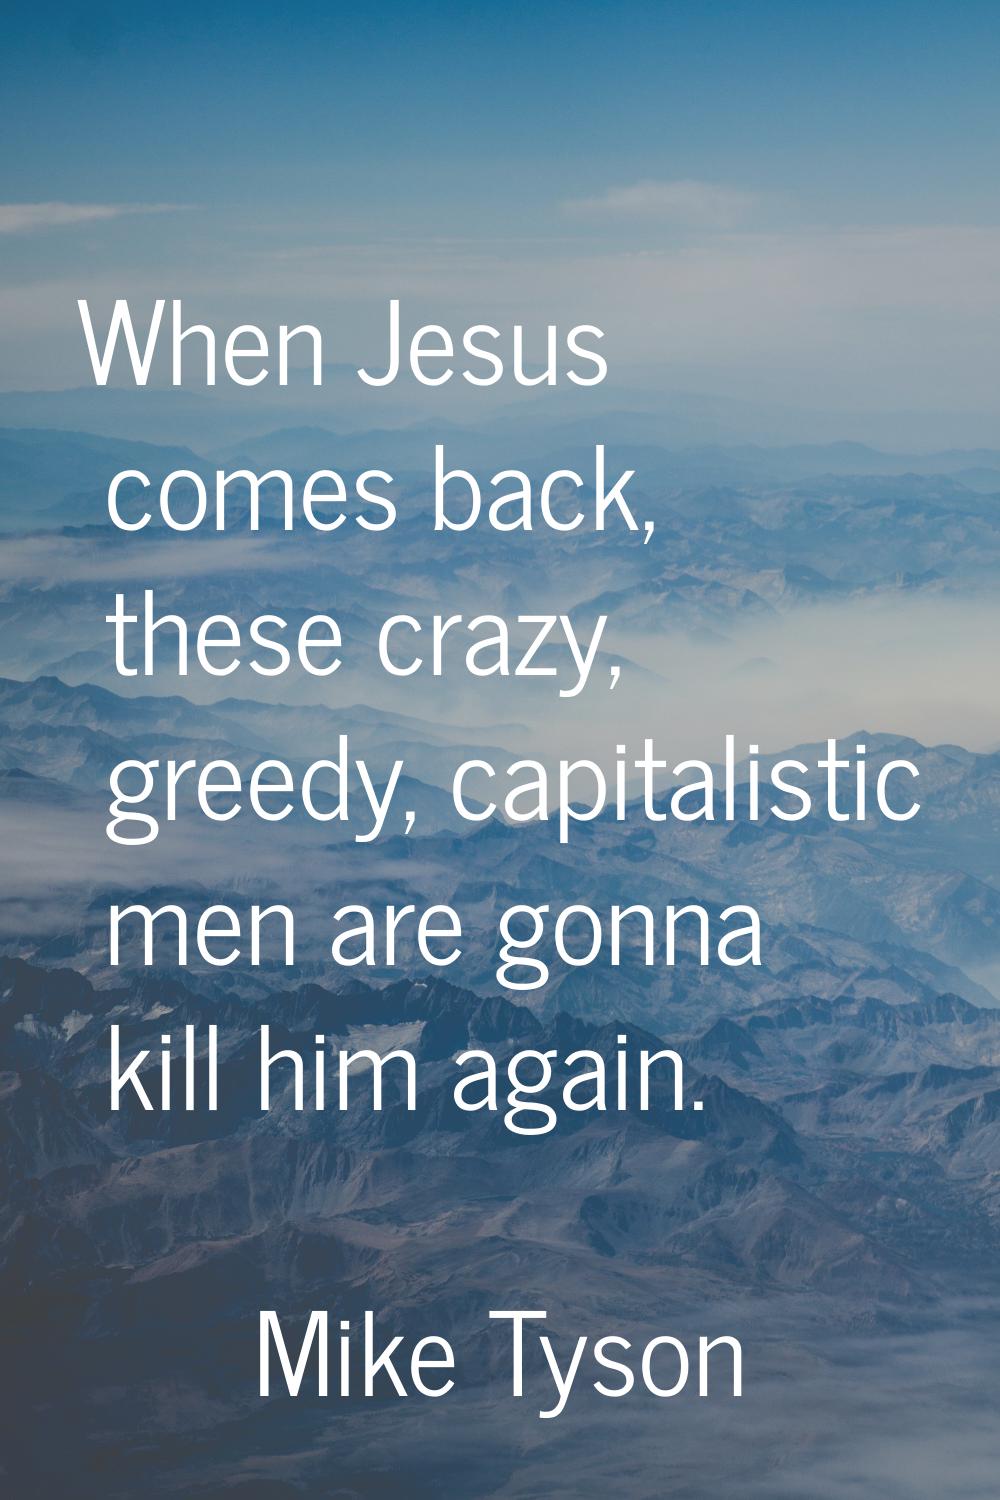 When Jesus comes back, these crazy, greedy, capitalistic men are gonna kill him again.